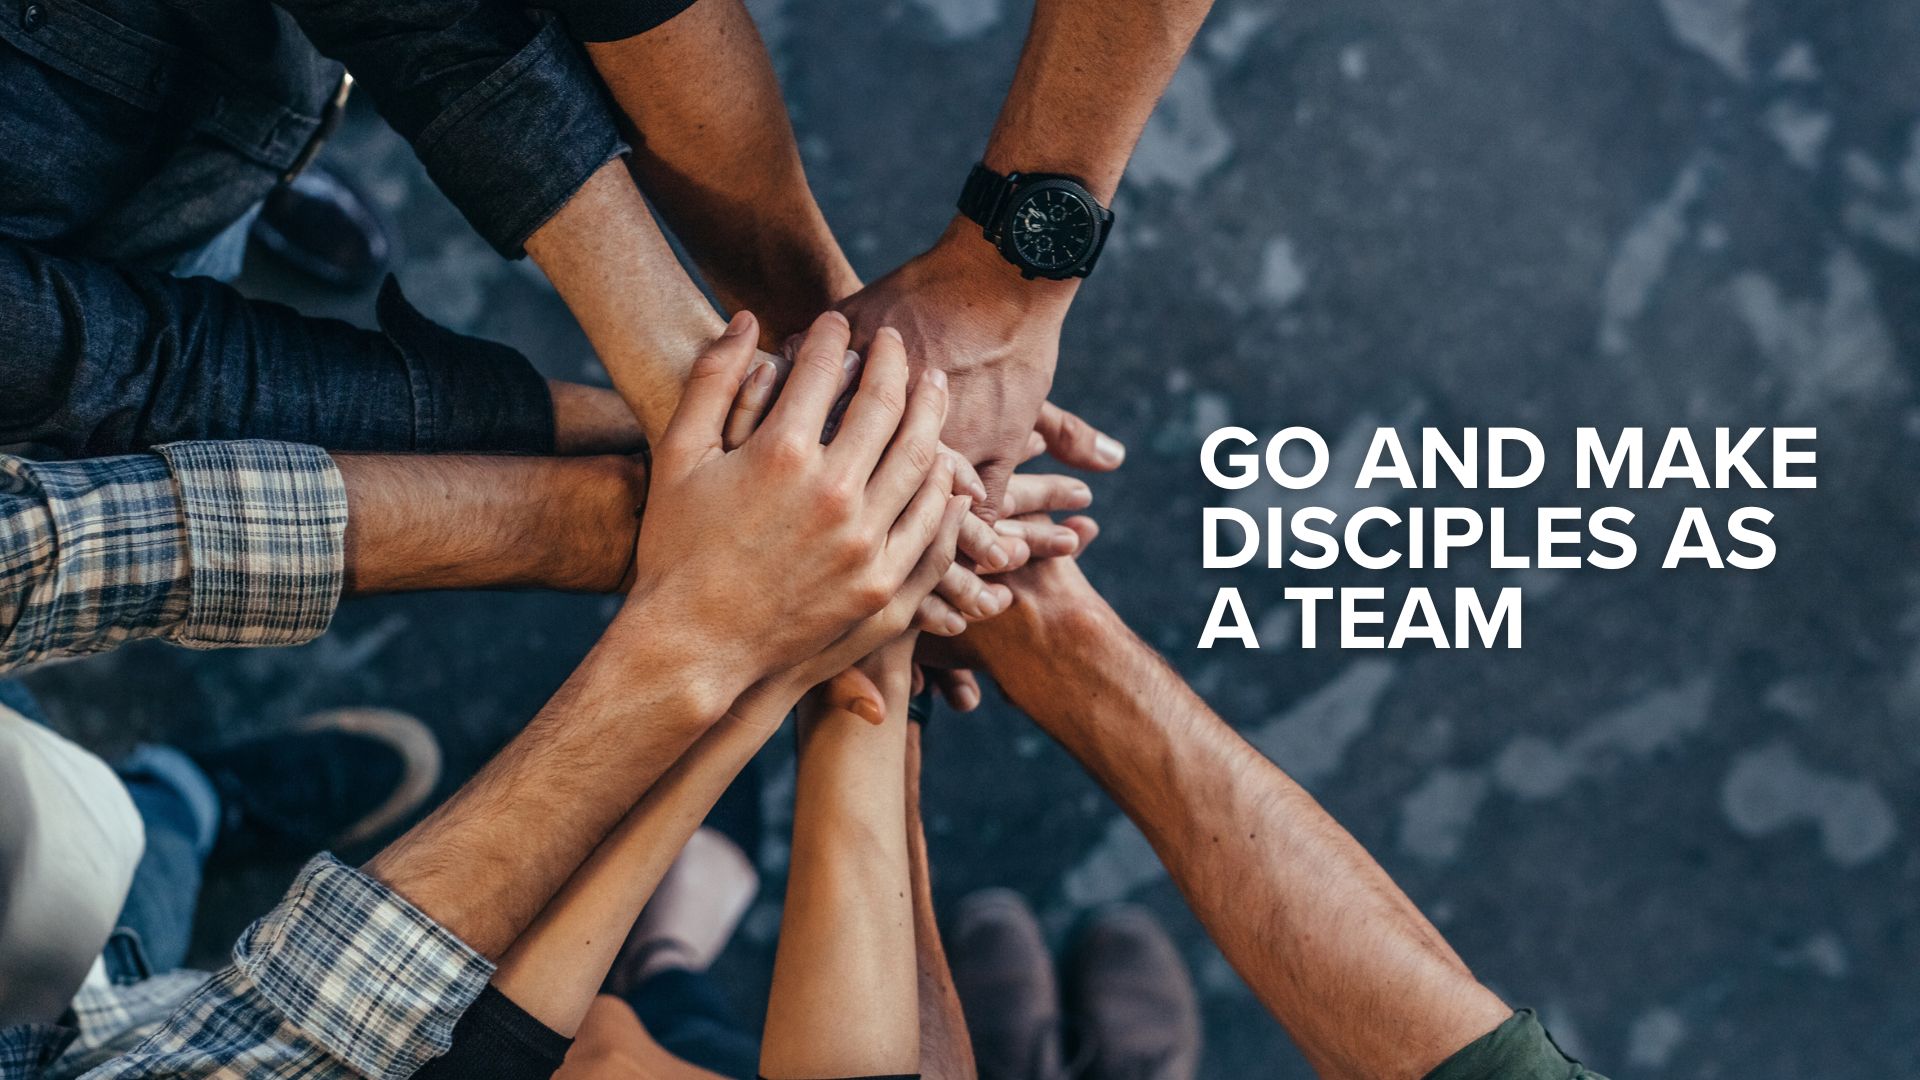 Make Disciples as a Team